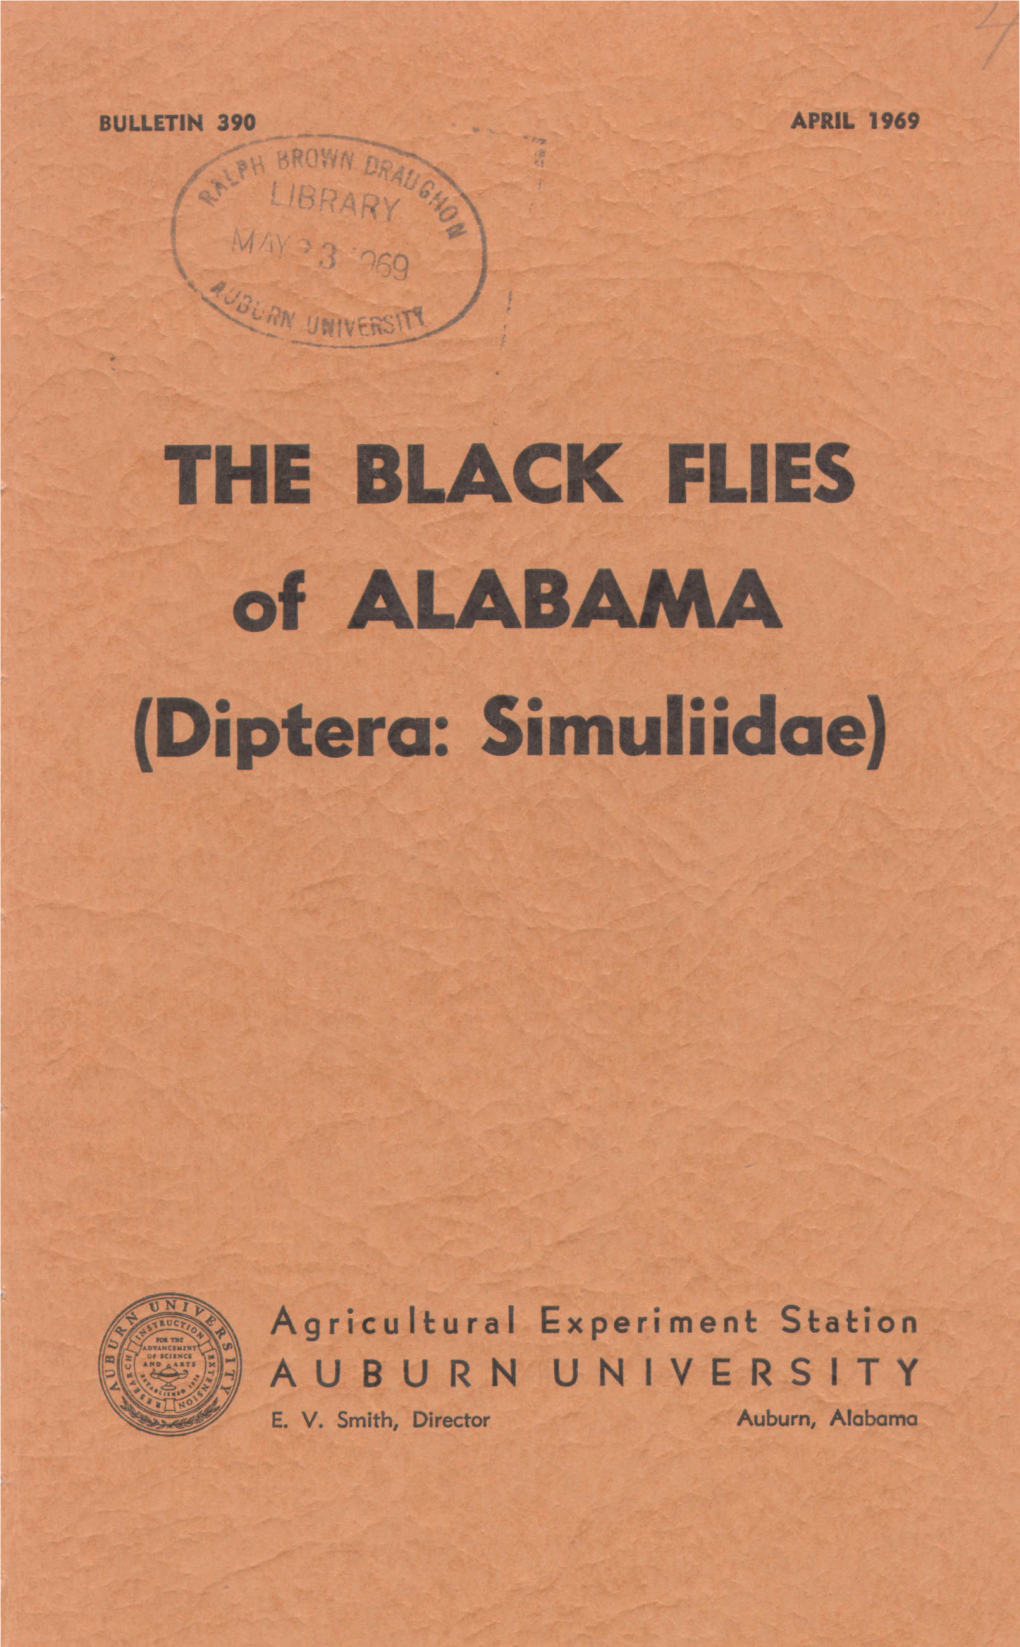 THE BLACK FLIES of ALABAMA (Diptera: Simuliidae)